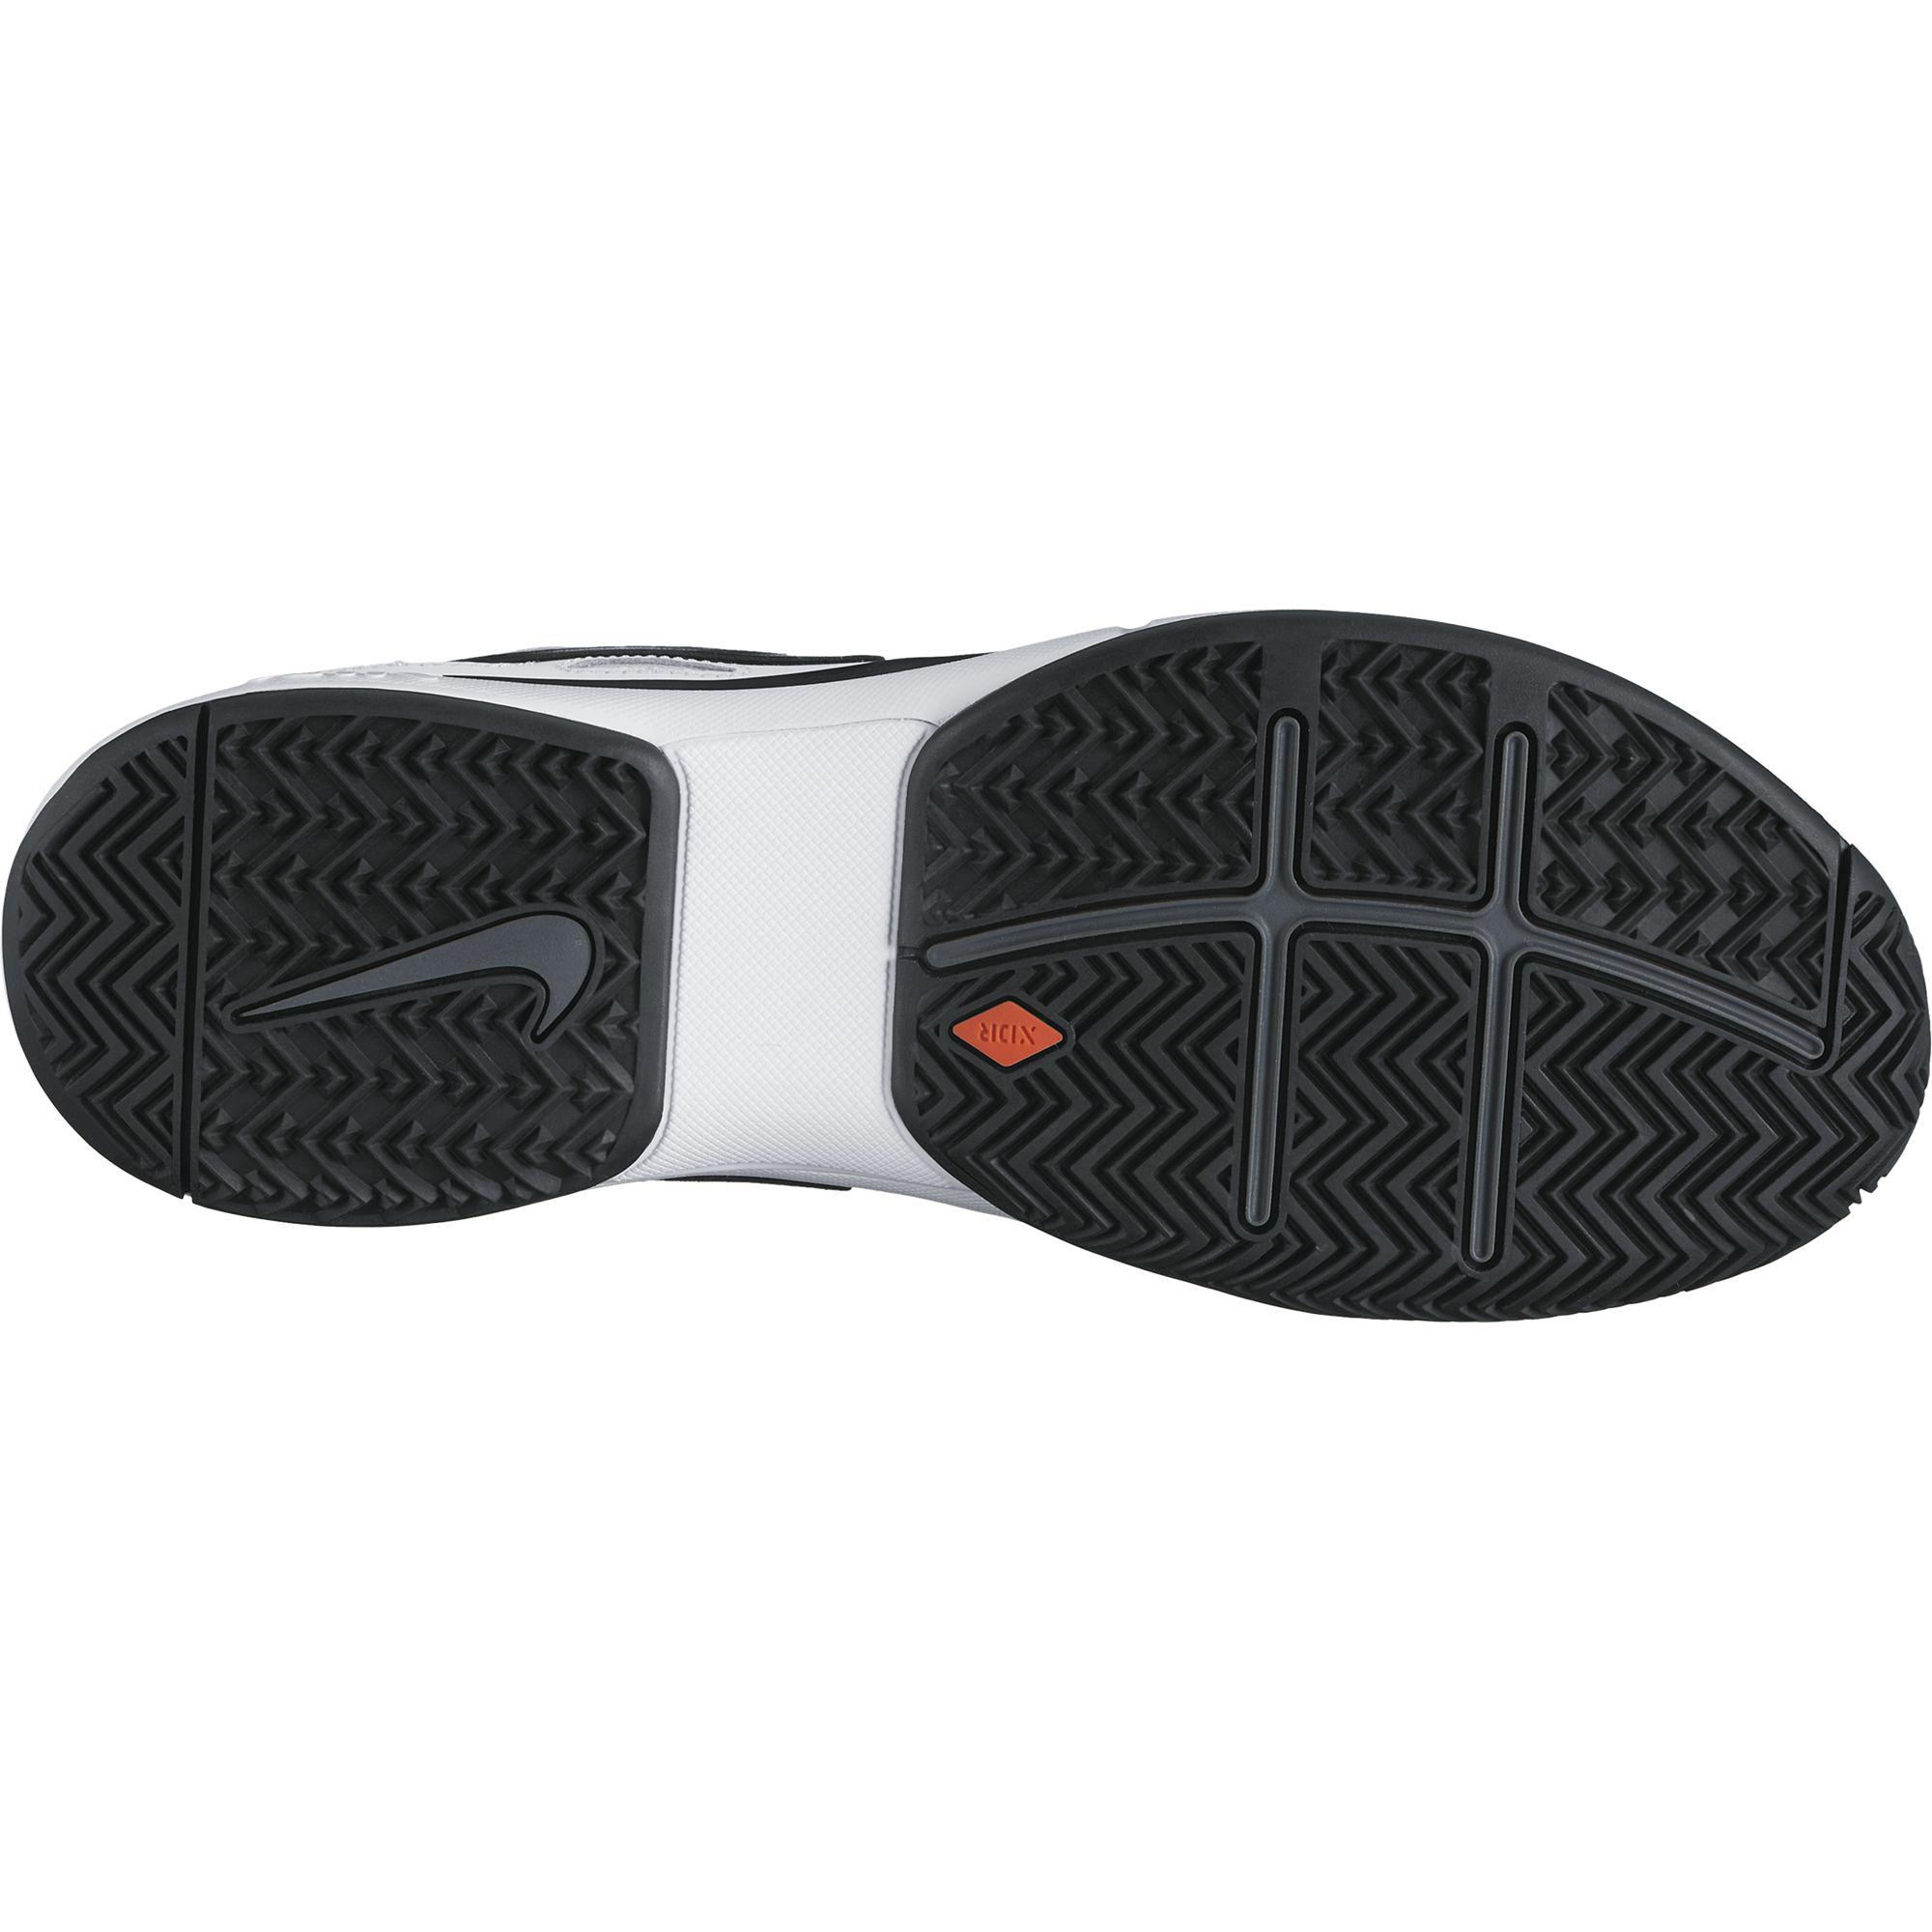 Acusación comentarista Plaga Nike Kids Air Vapor Advantage Leather Tennis Shoes - White/Black -  Tennisnuts.com